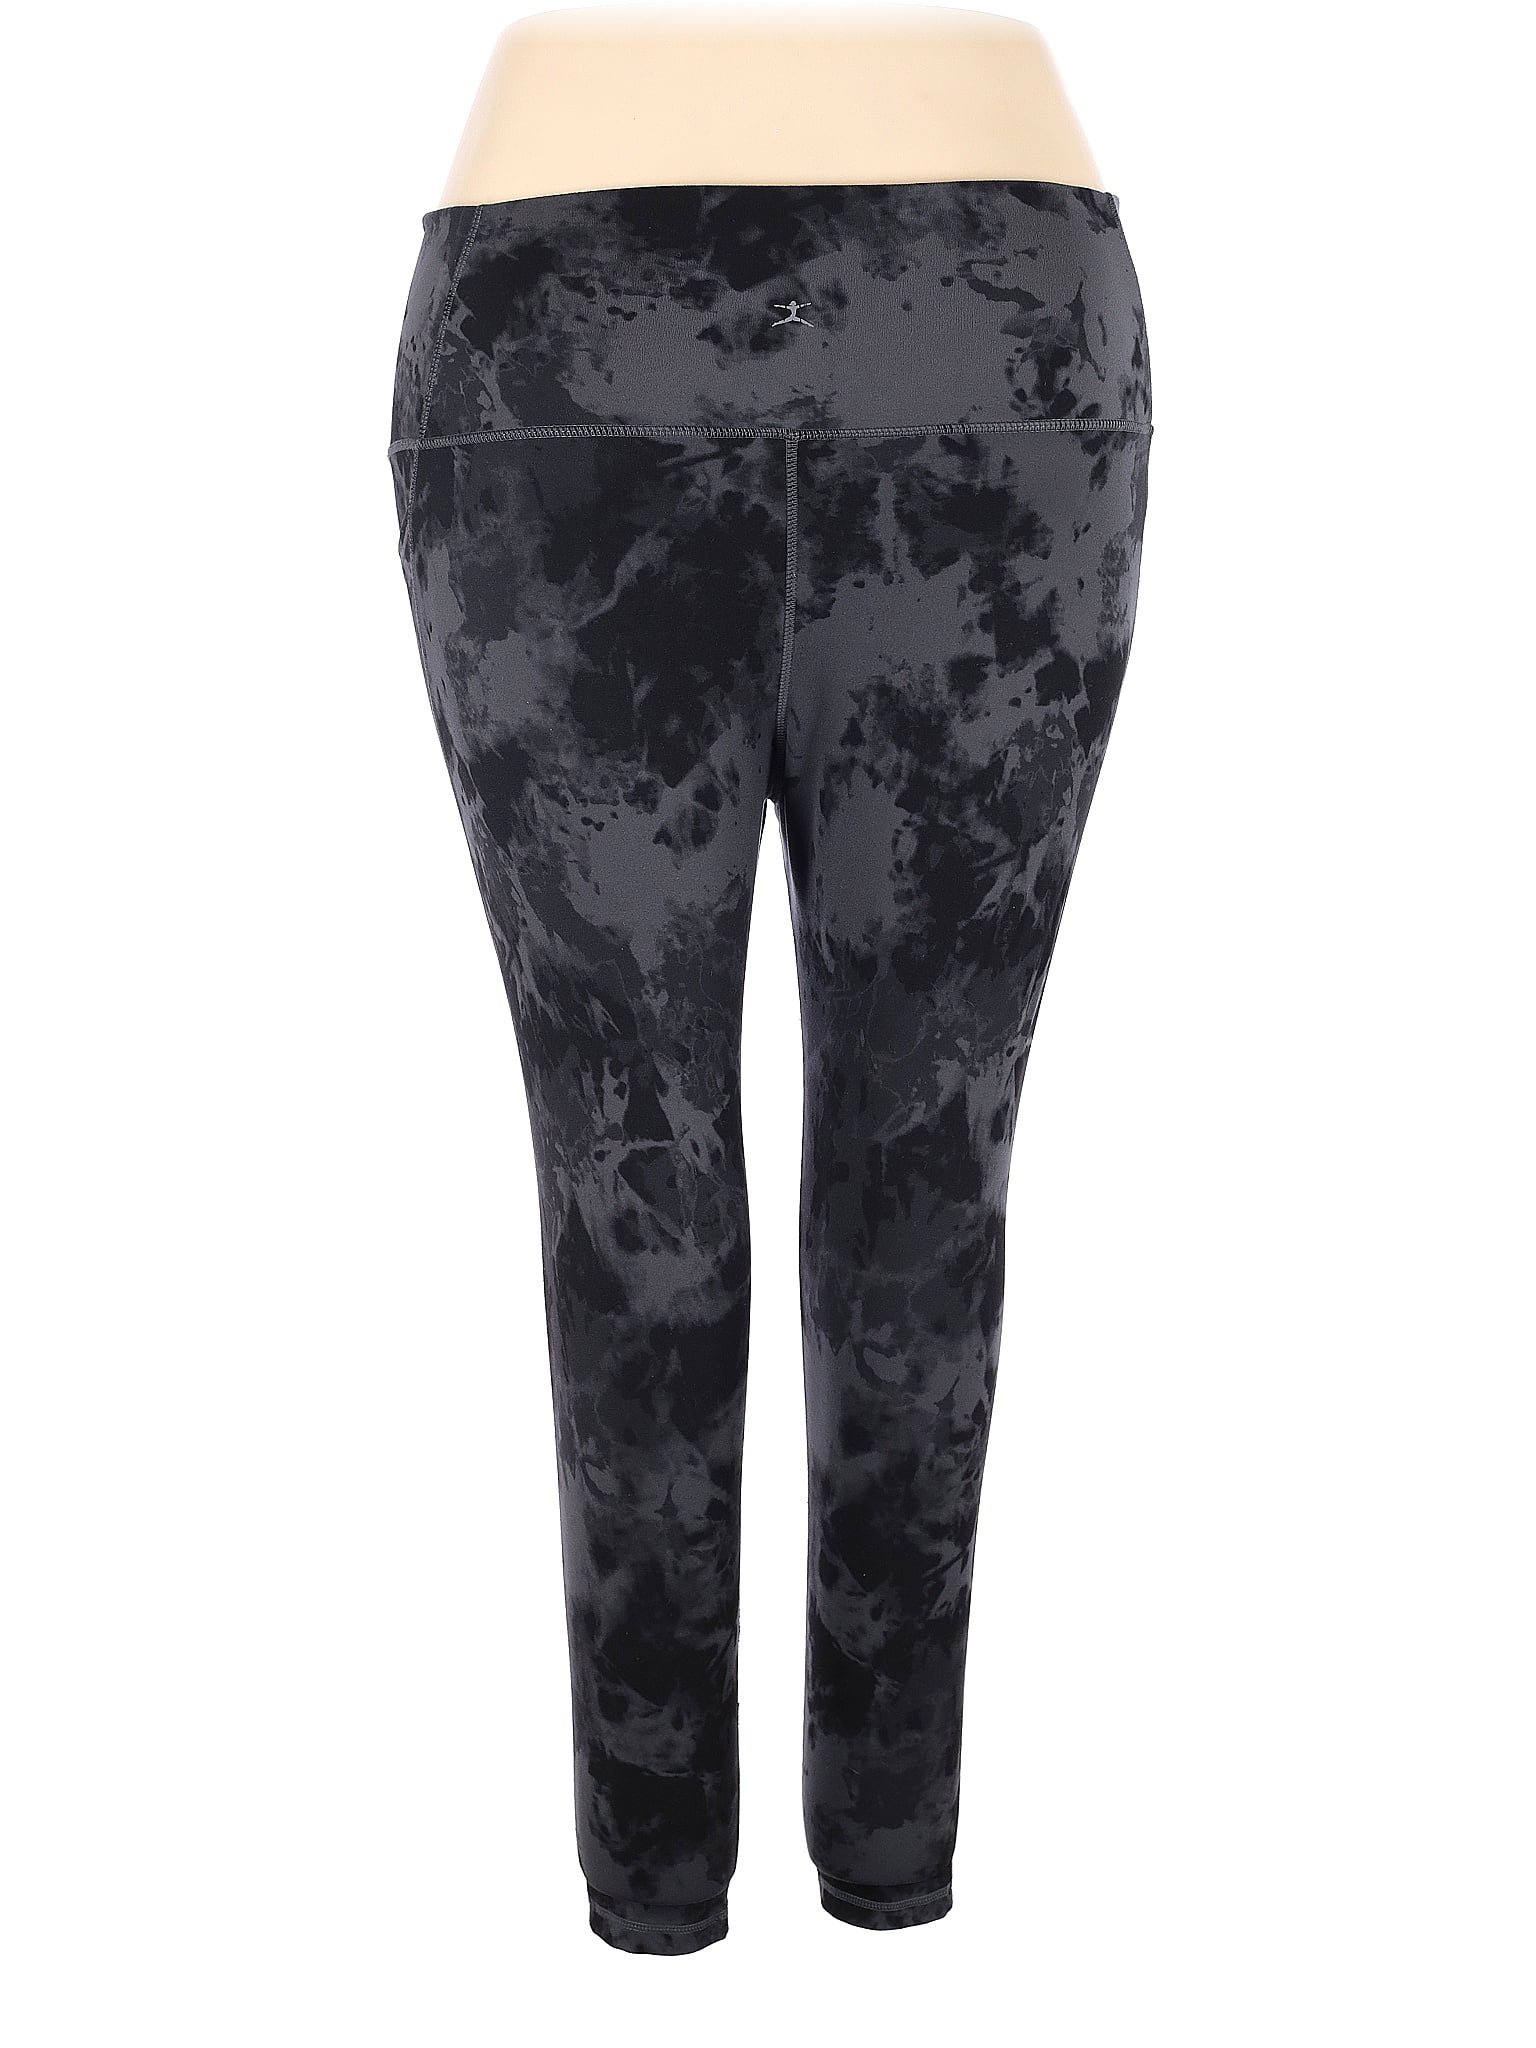 Danskin Women's Plus Size Essential Yoga Pant Medium Black